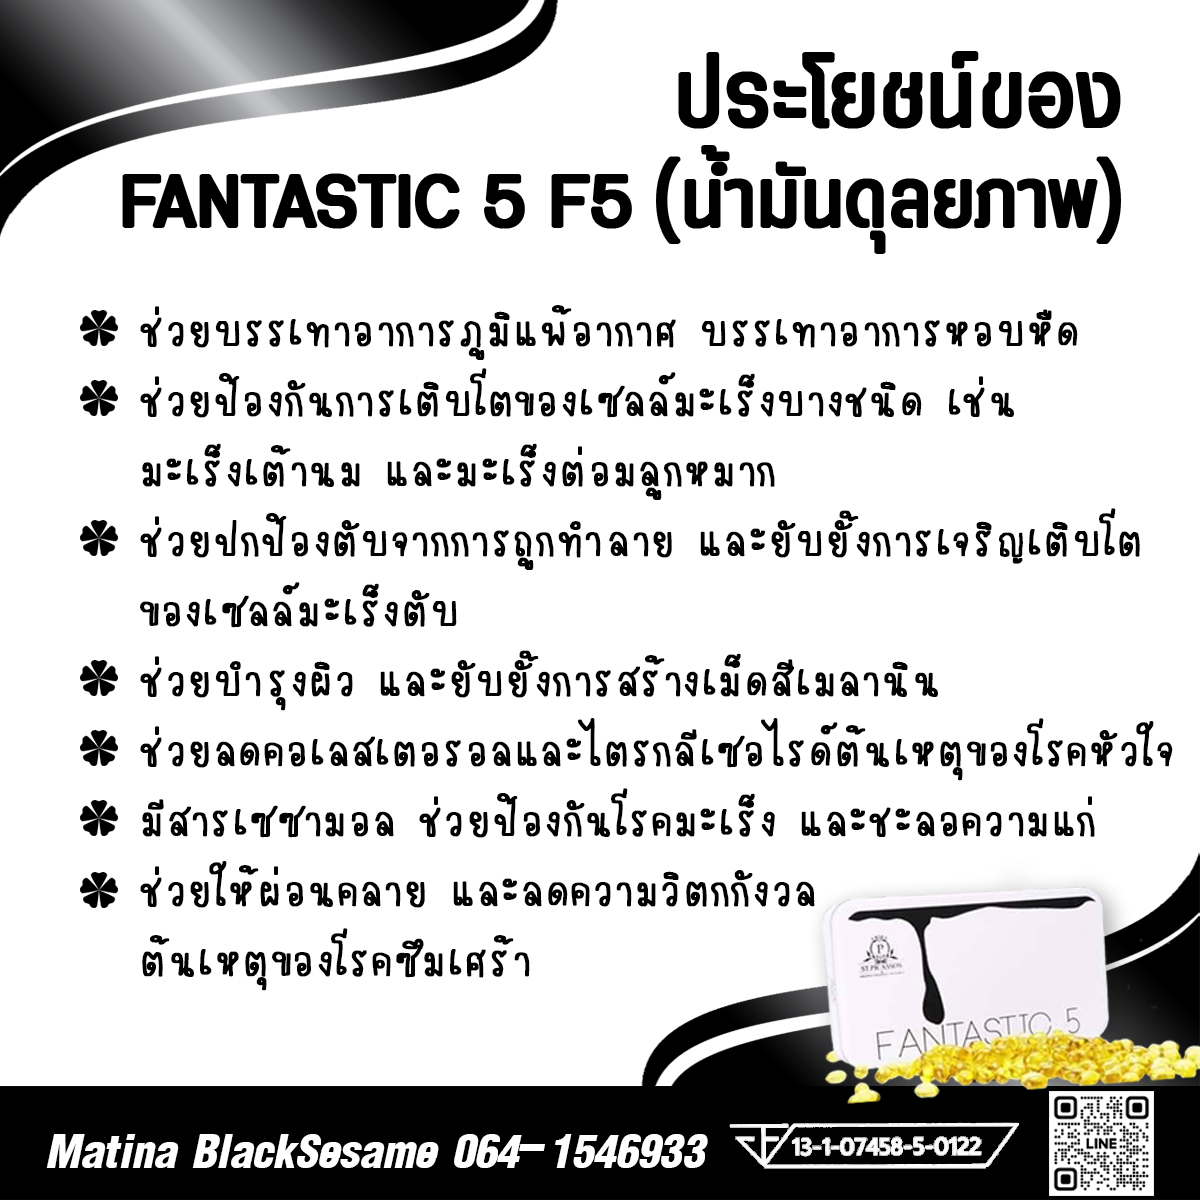 Fantastic5(F5) แฟนทาสติก ออยด์ น้ำมันดุลยภาพ 5 ชนิด